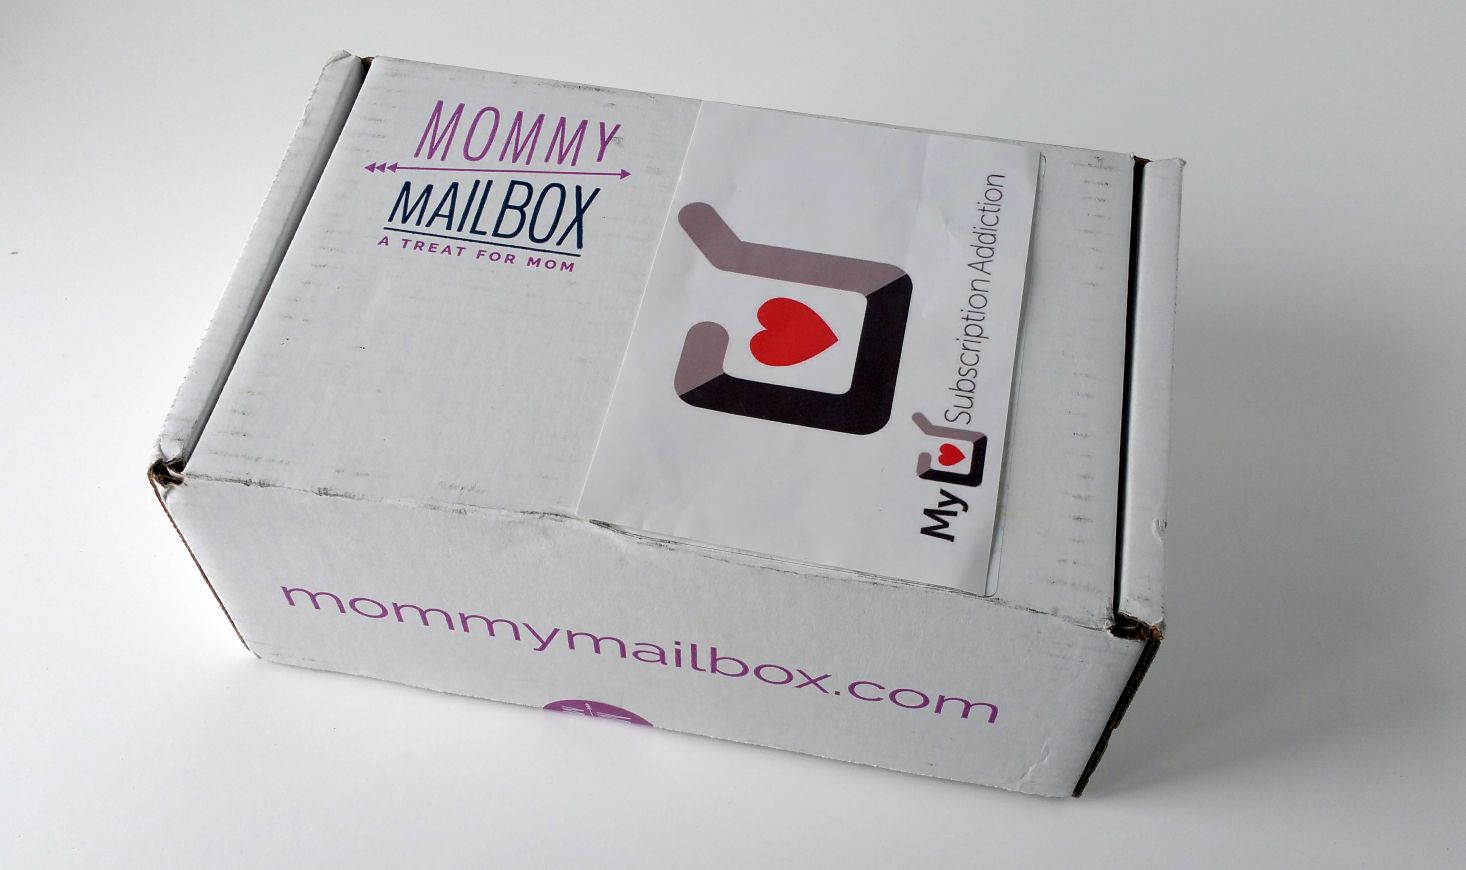 Mommy-mailbox-february-2017-box